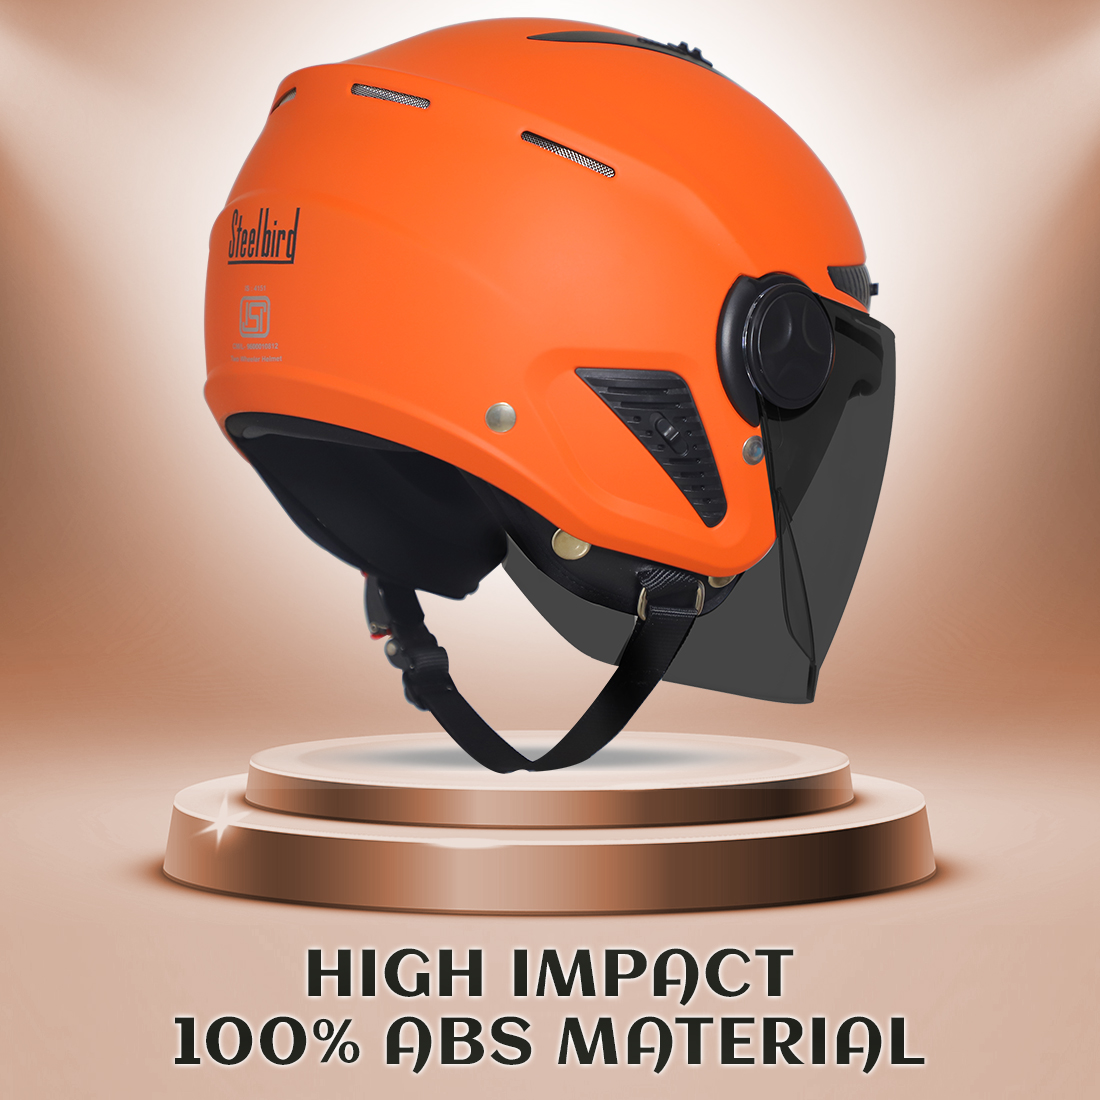 Steelbird SBH-24 Boxx ISI Certified Open Face Helmet For Men And Women (Matt Coral Orange With Smoke Visor)